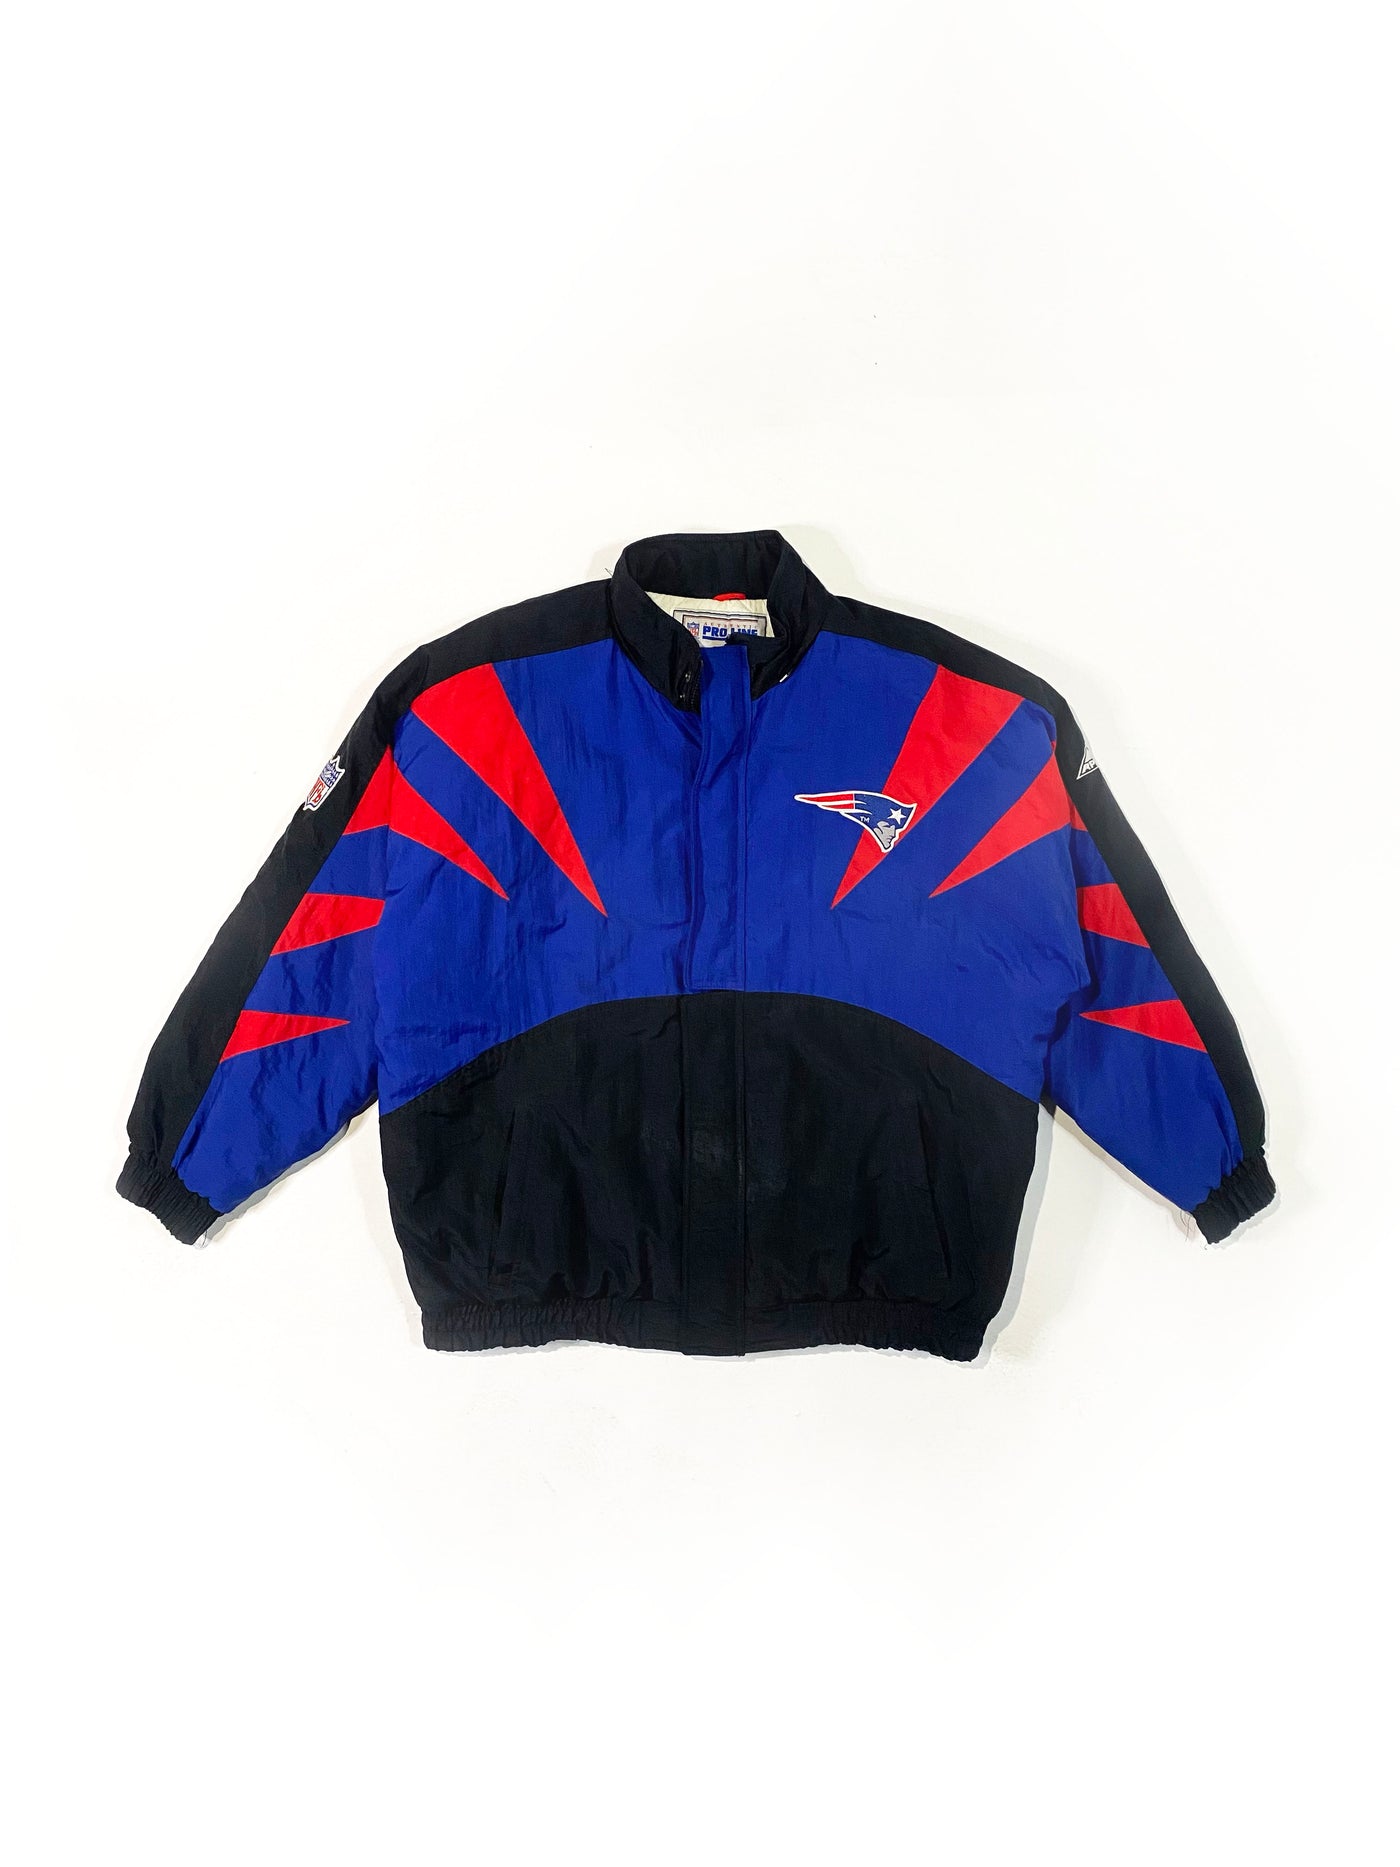 Vintage 90s Sharktooth Style Patriots Puffer Jacket